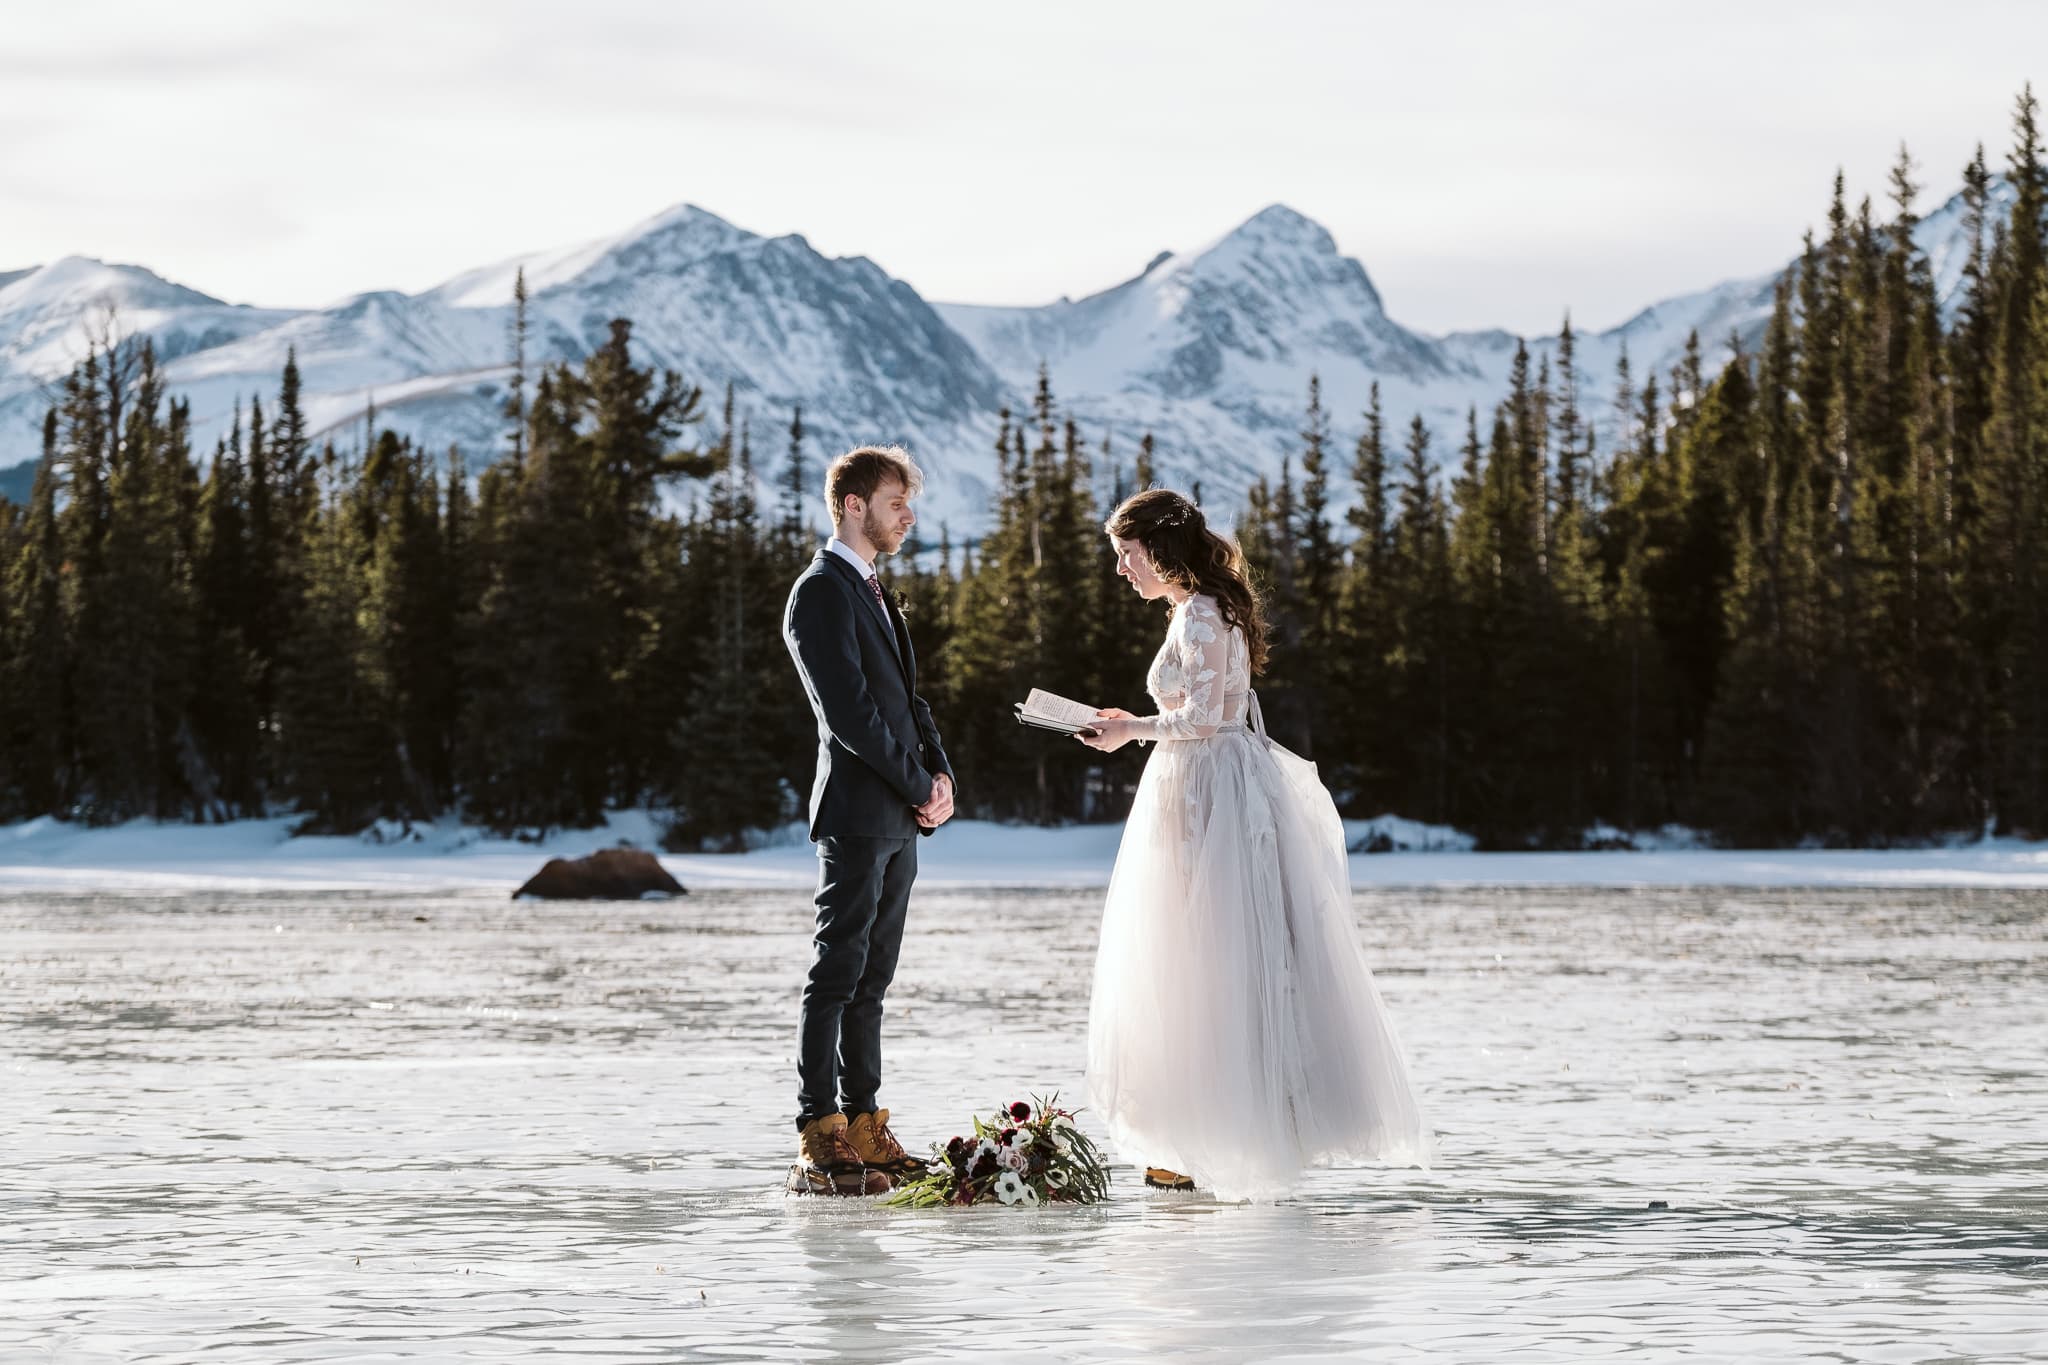 January elopement in Colorado on frozen alpine lake